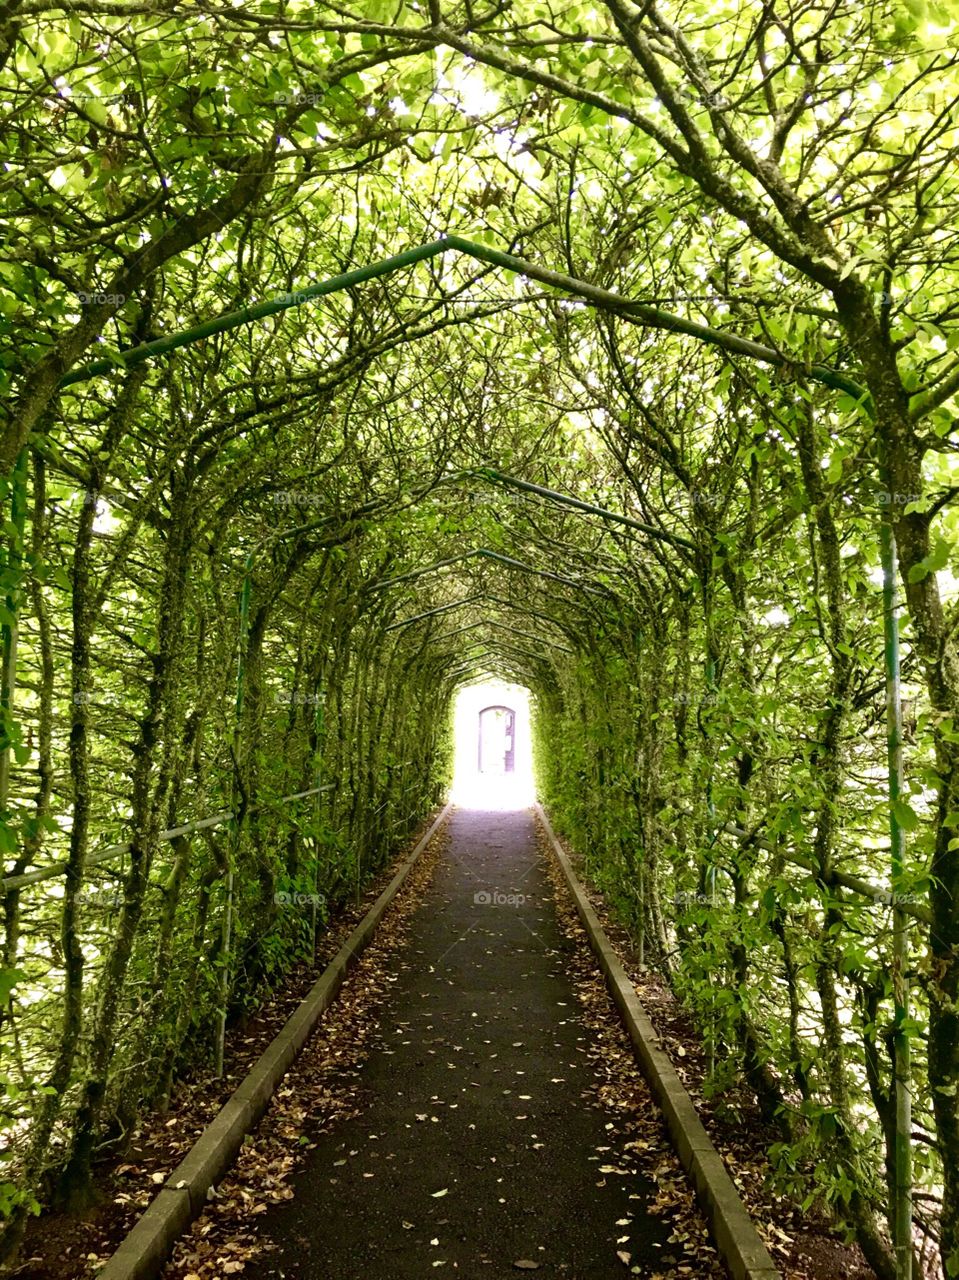 Dromoland Castle gardens - tunnel of green!